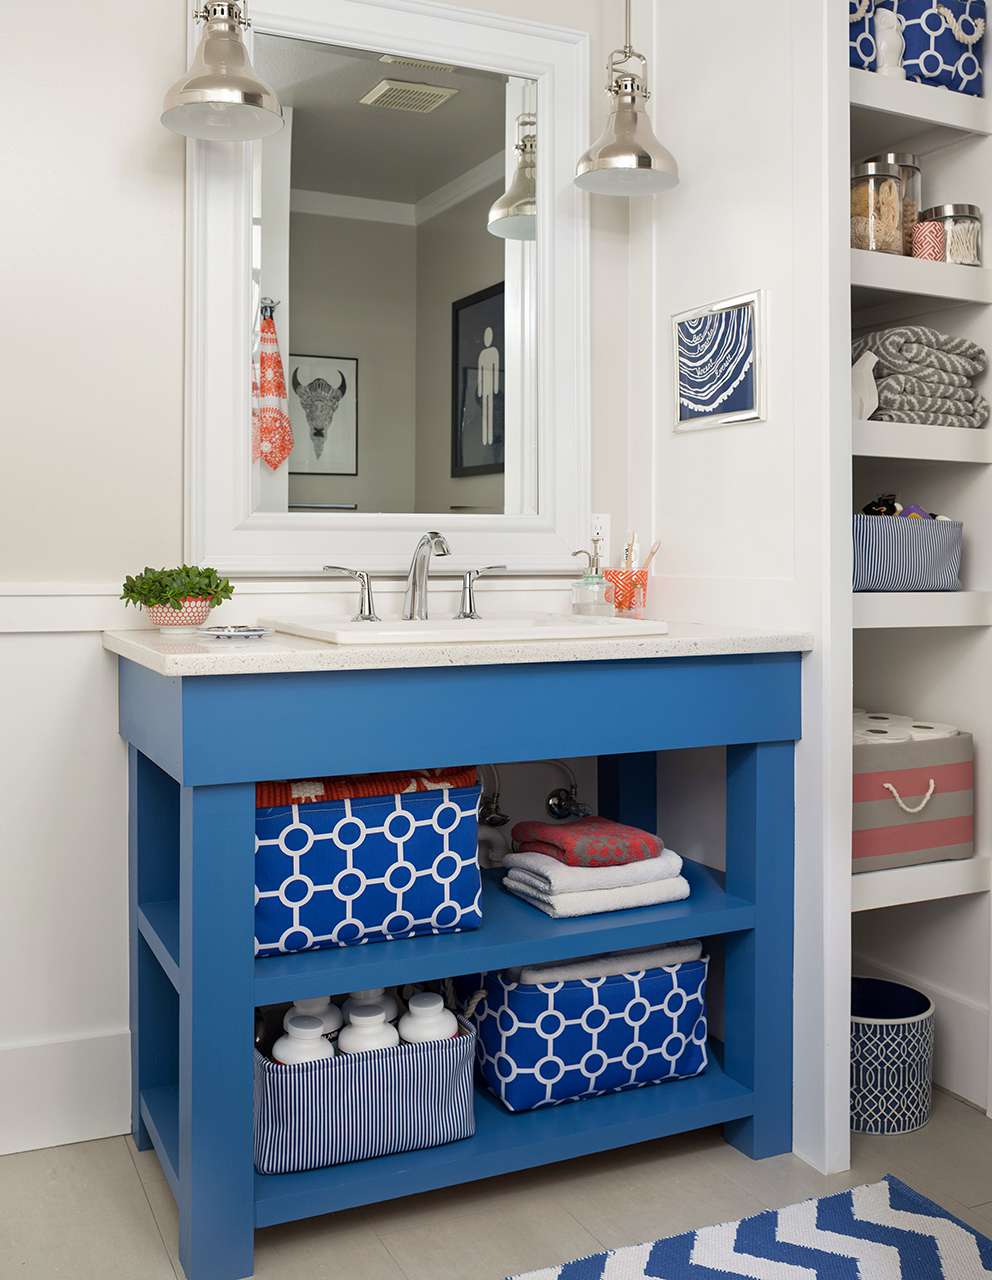 18 Diy Bathroom Vanity Ideas For Custom, Bathroom Vanity Cabinets Without Countertop